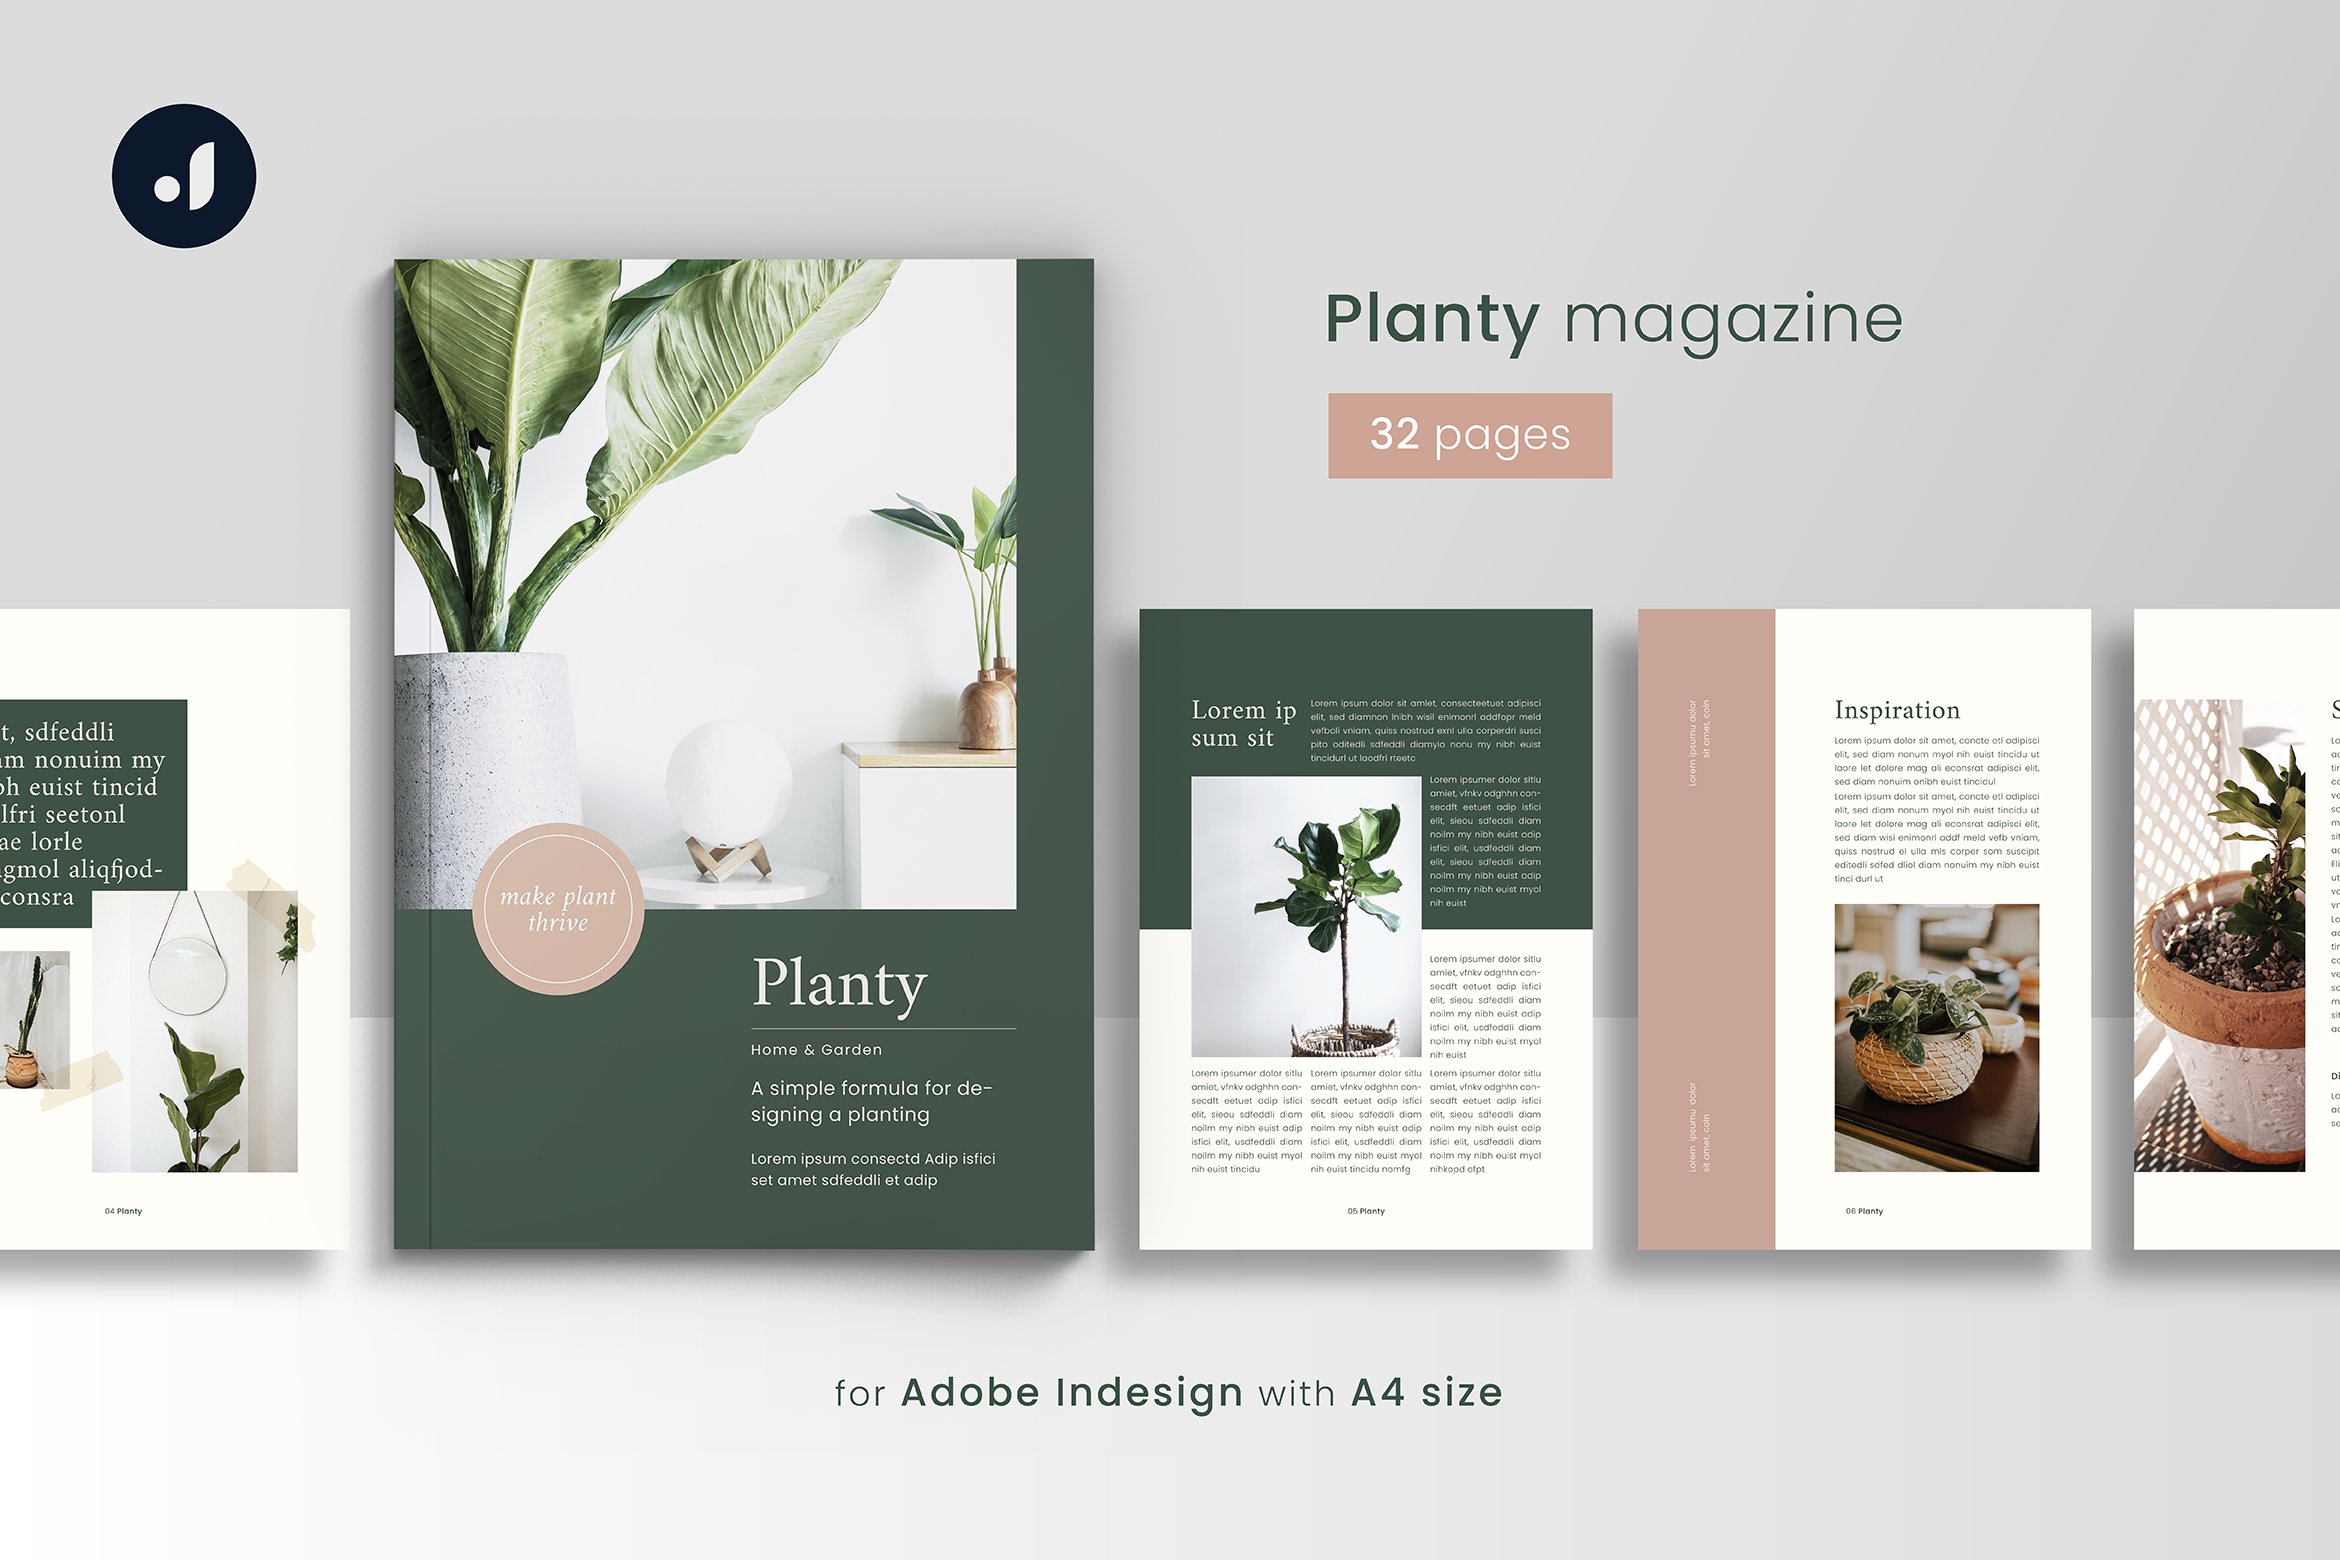 Planty Magazine cover image.